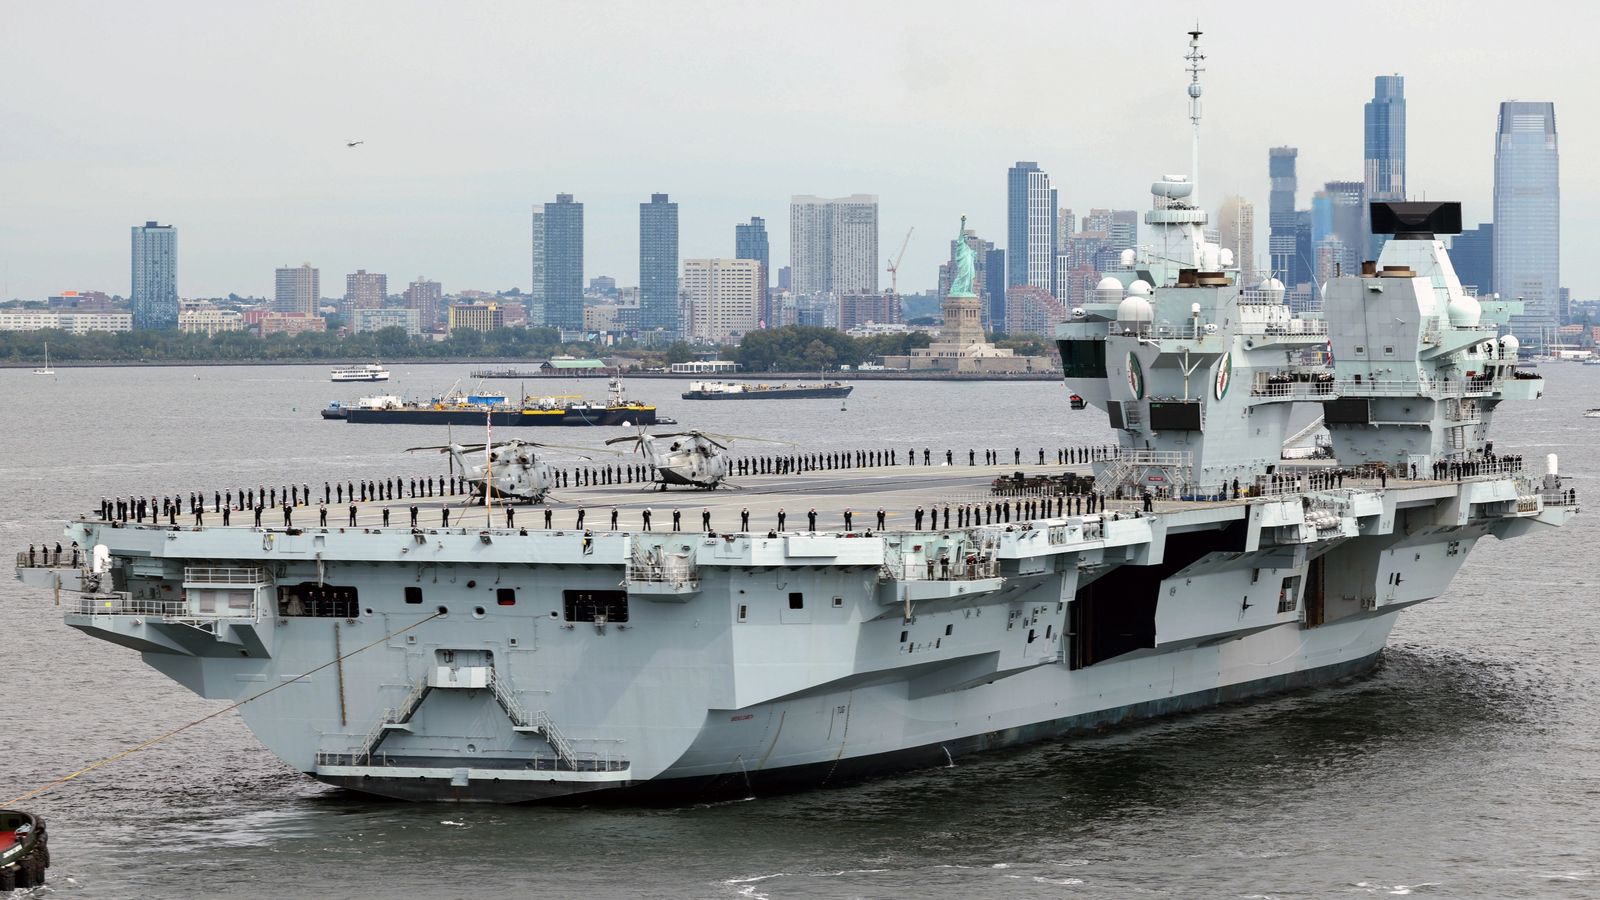 HMS Queen Elizabeth anchors in New York as Liz Truss says she wants to strengthen UK-US bond